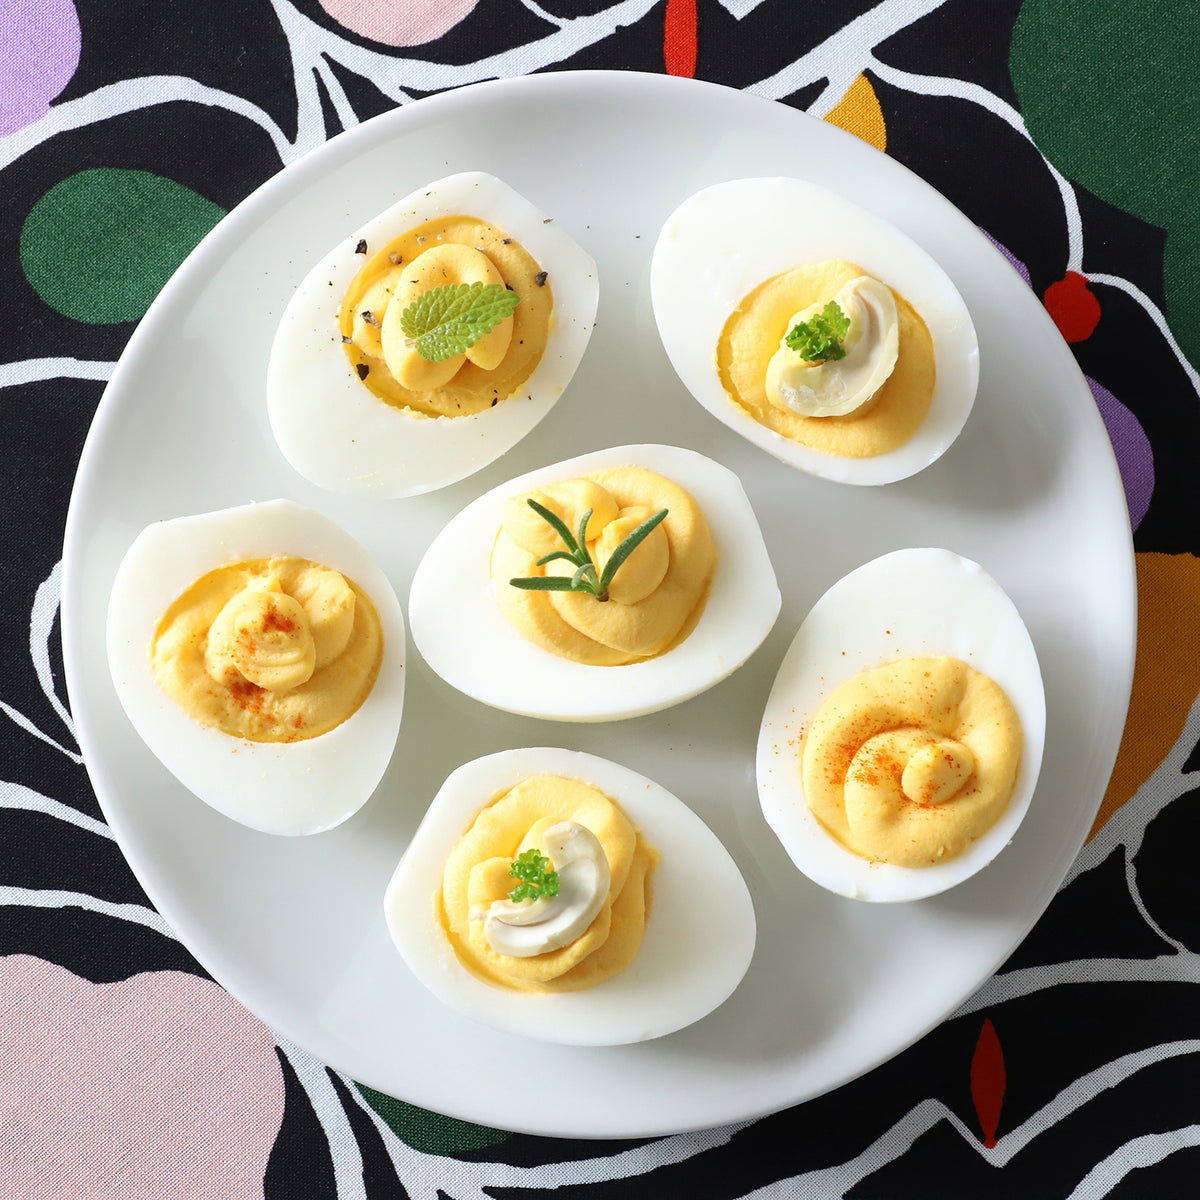 Microwave Egg Cooker, Egg-Tastic Cooker - China Microwave Egg